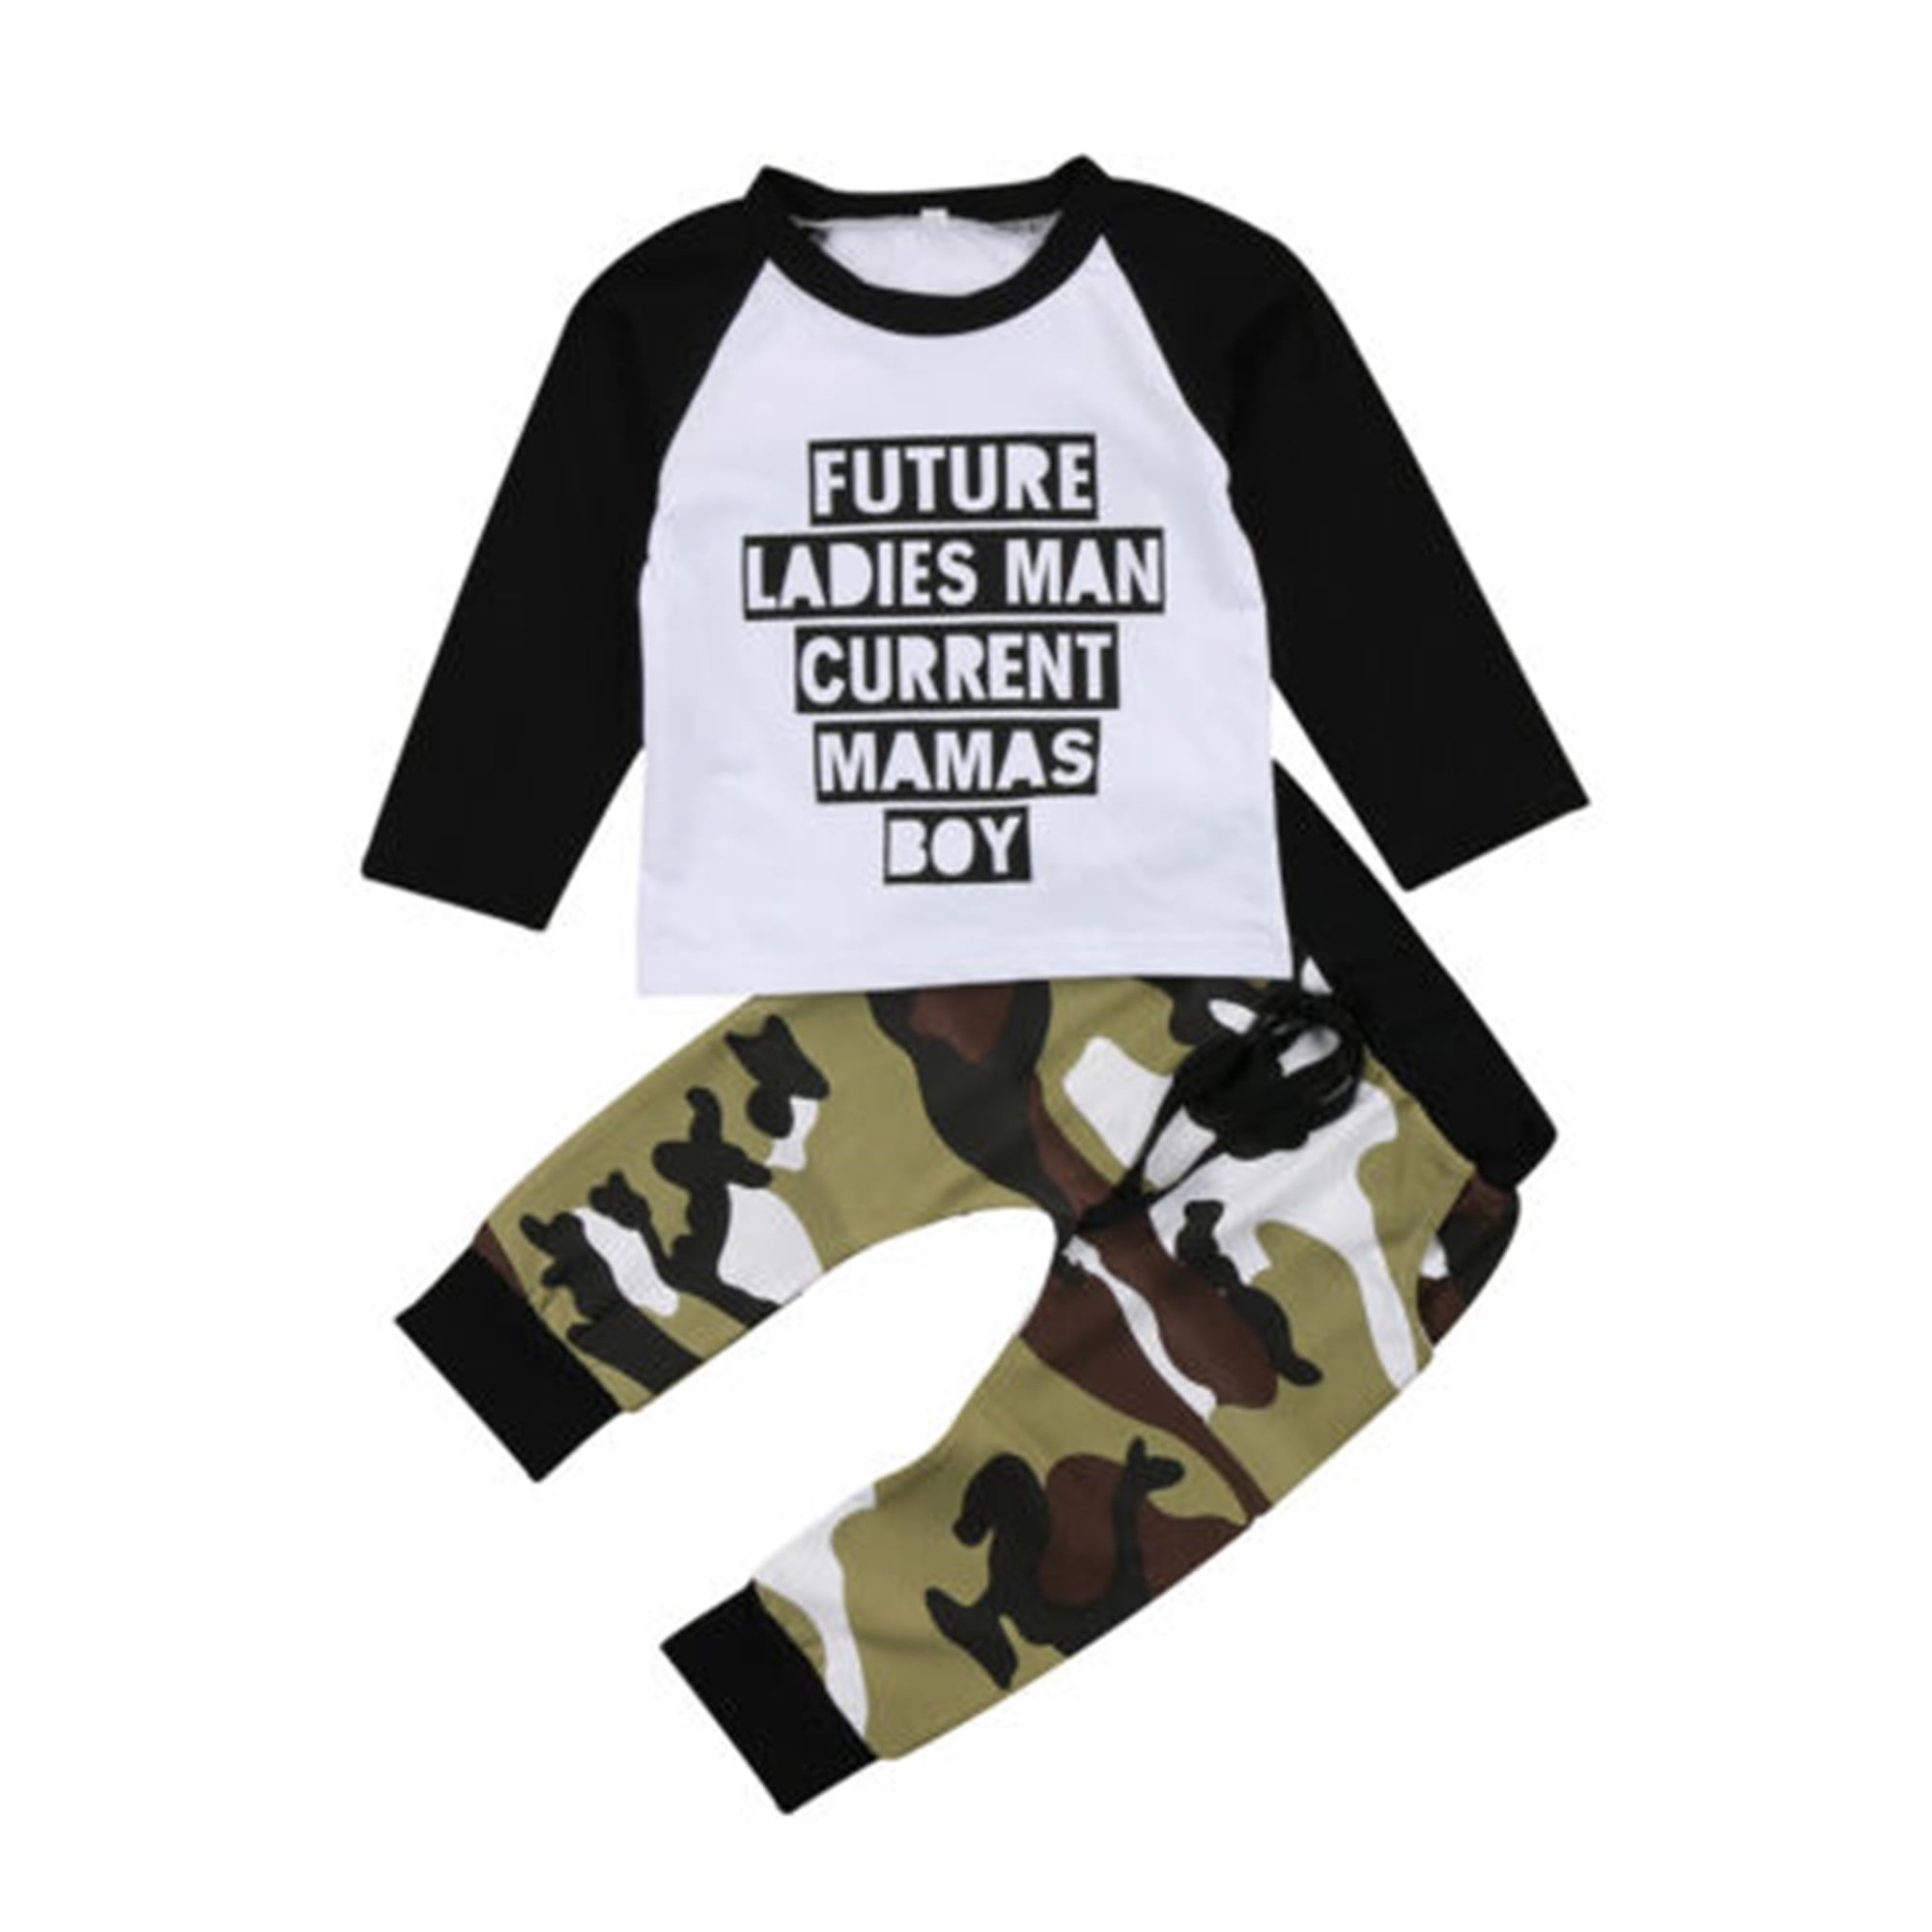 Fashion Clothes Camouflage T-shirt Tops Long Pants Boys Cotton Kids Outfits 2PCS